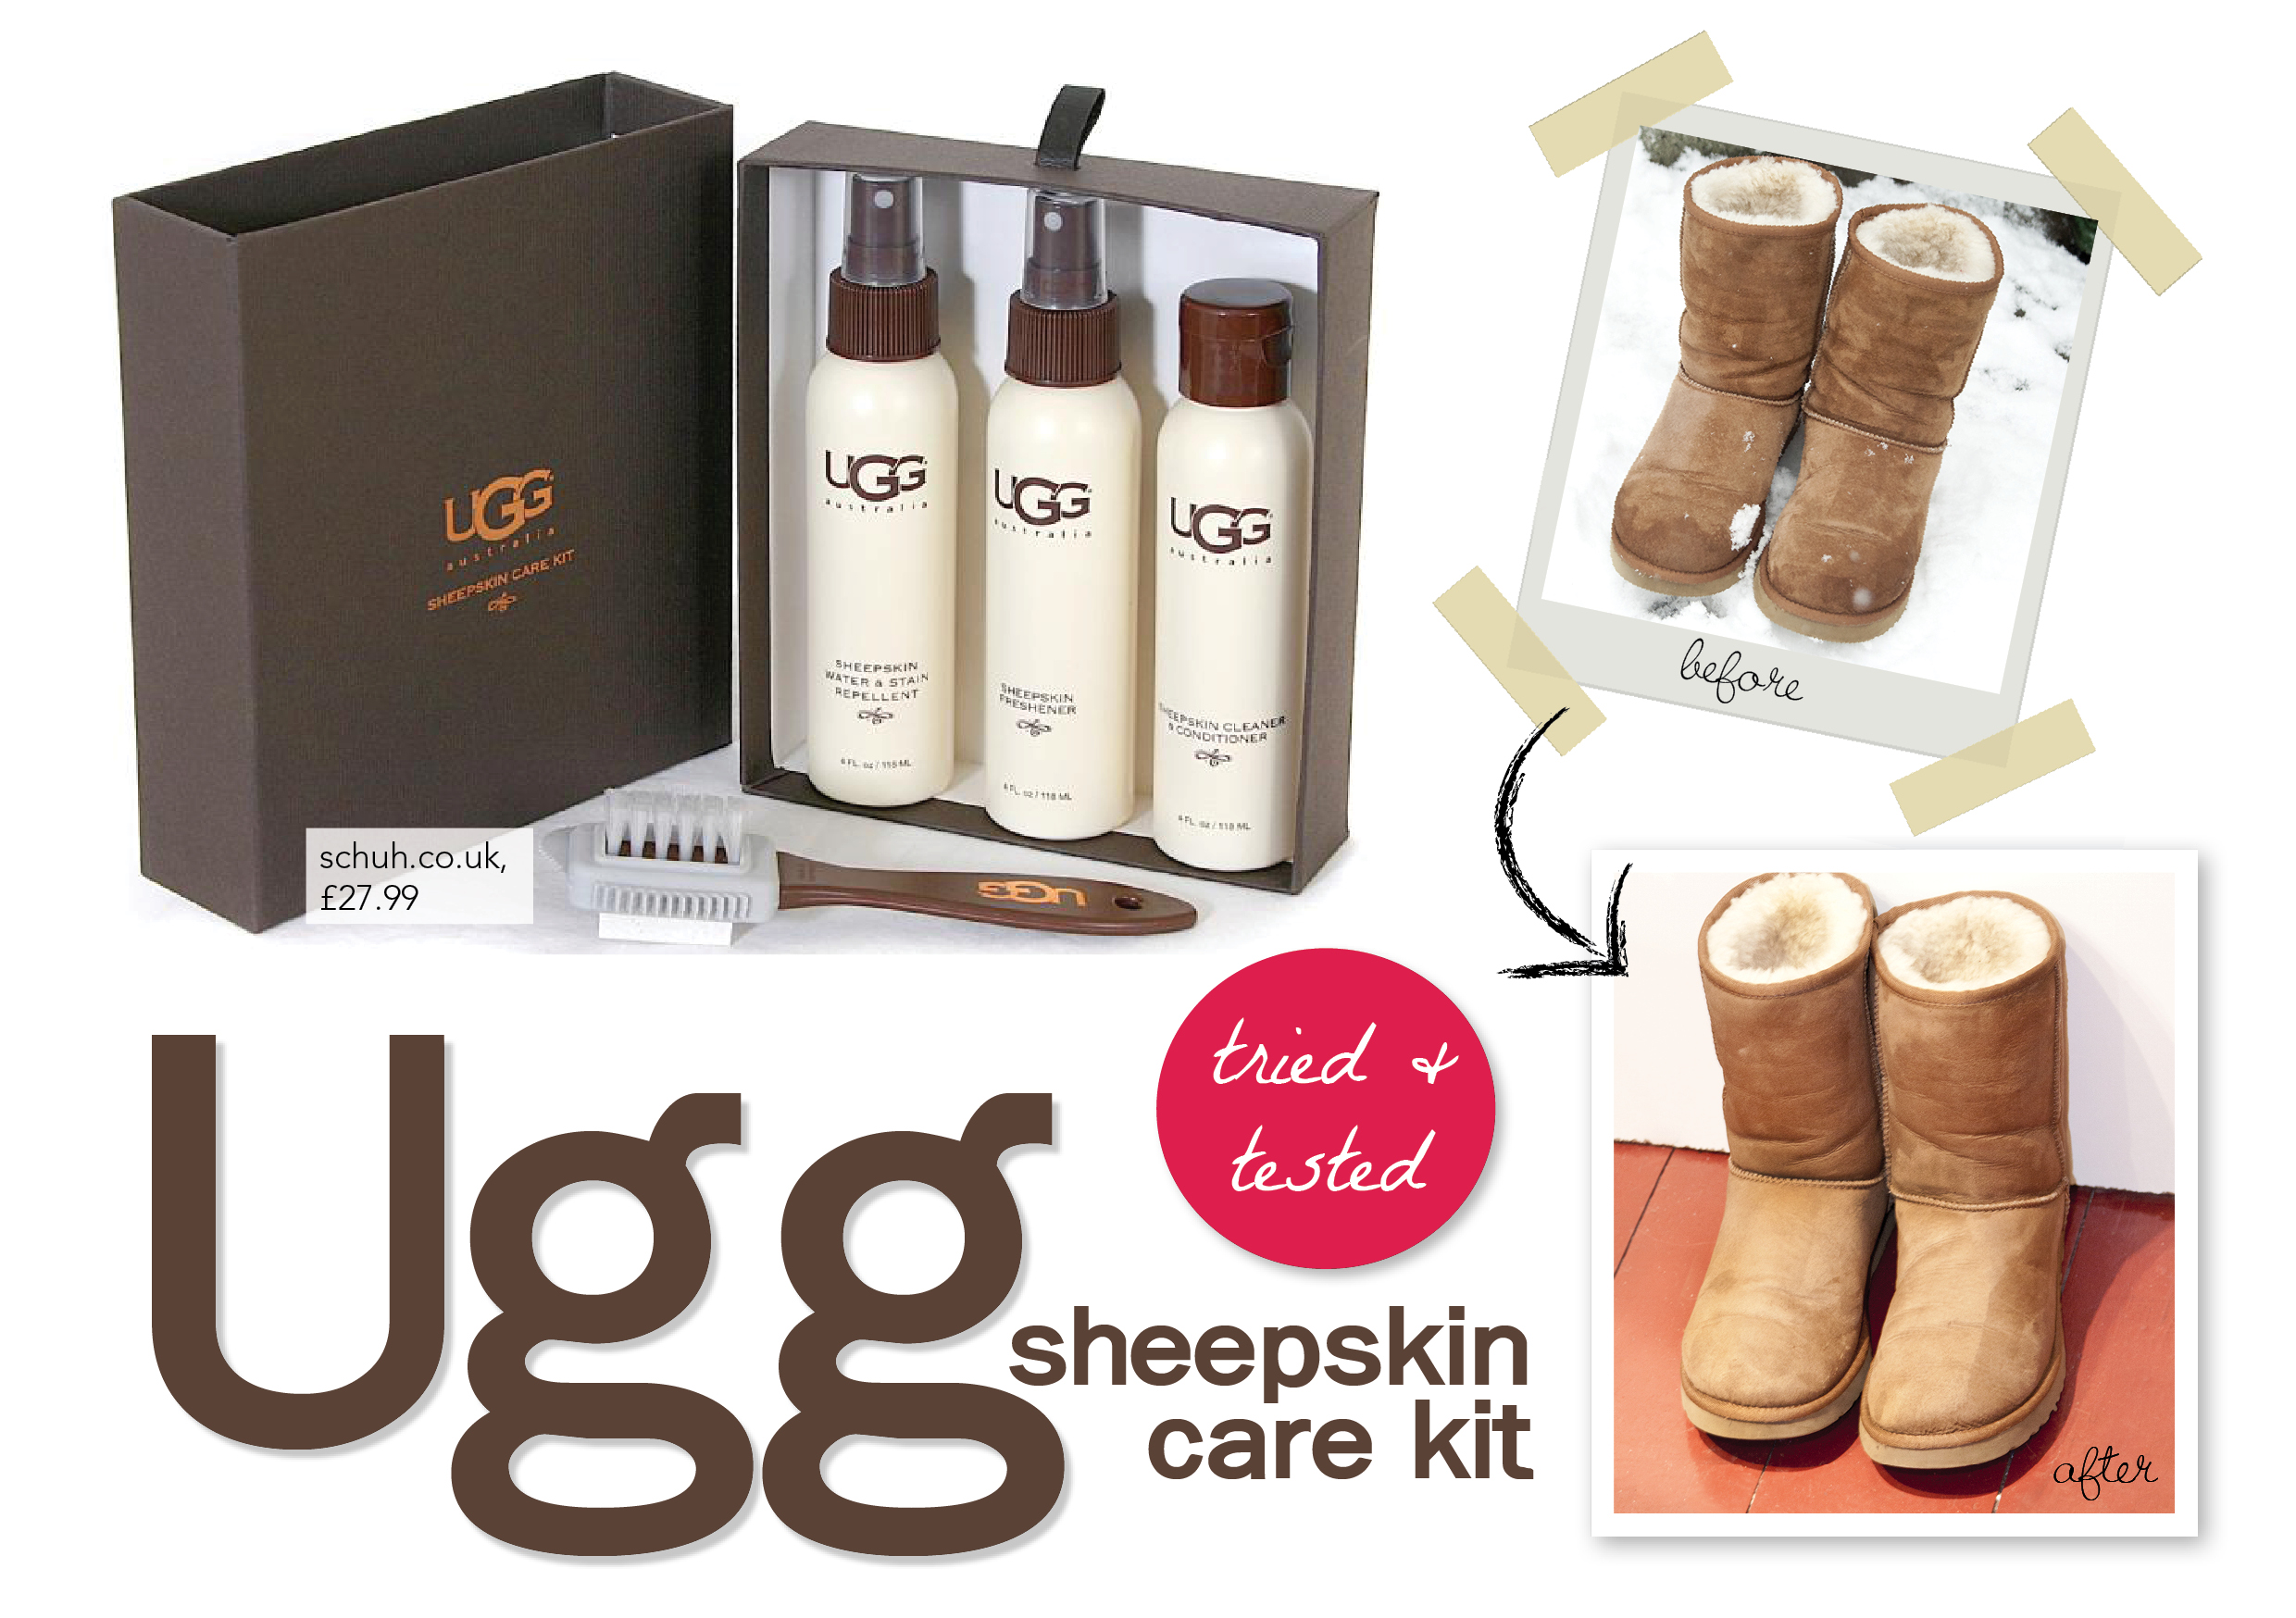 ugg sheepskin care kit how to use